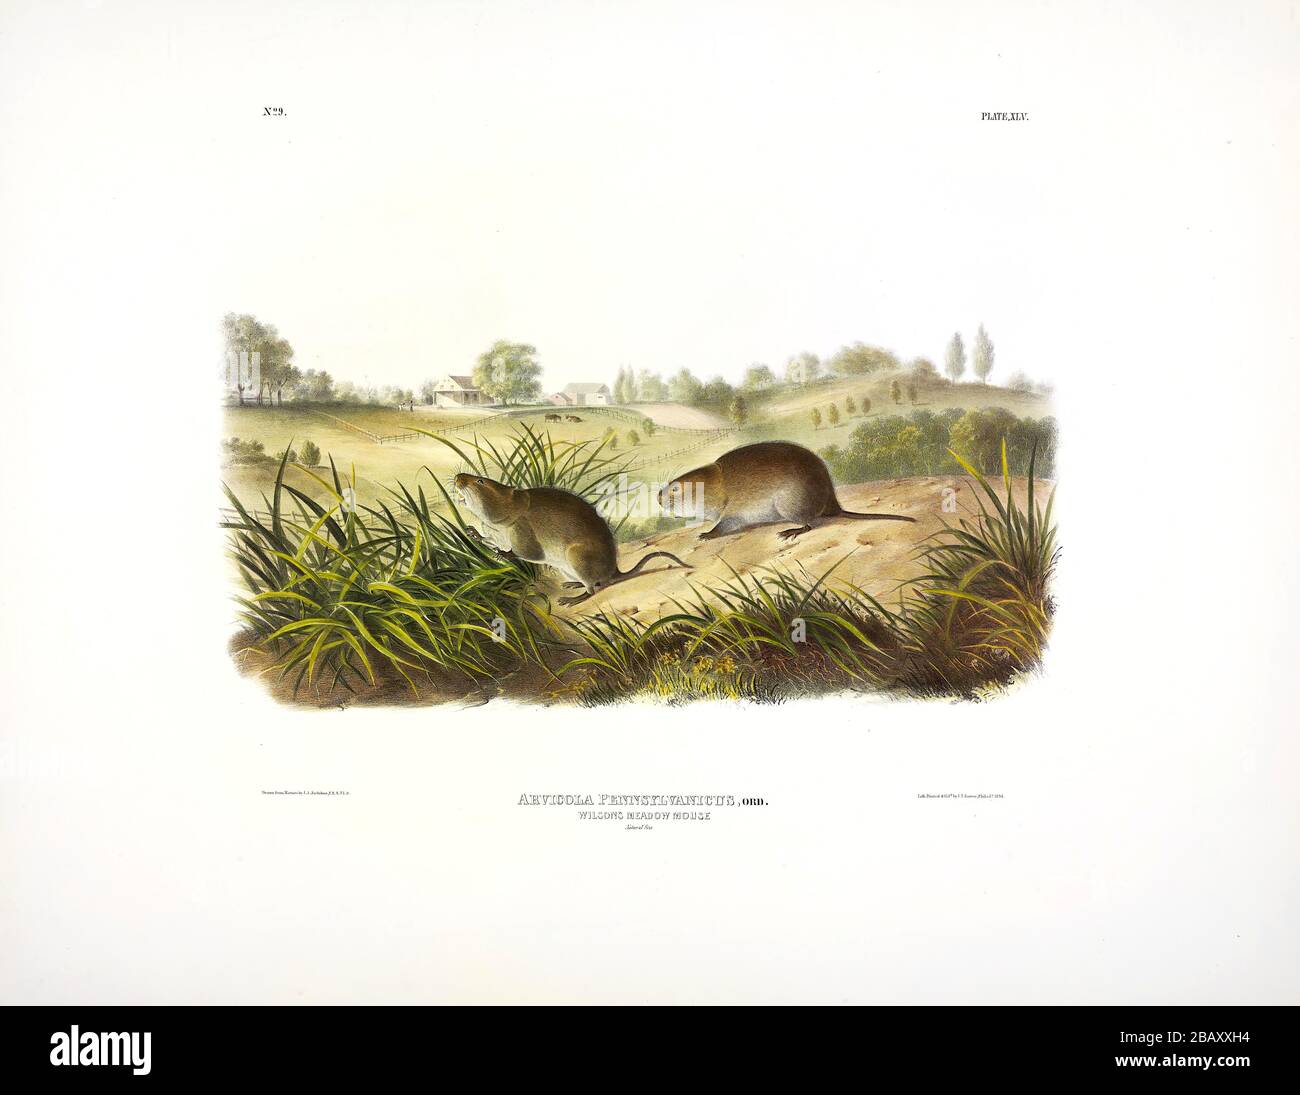 Platte 45 Wilsons Meadow Mouse (Meadow Vole) die viviparösen Quadrupeds Nordamerikas, John James Audubon, sehr hochauflösendes, qualitativ hochwertiges Bild Stockfoto